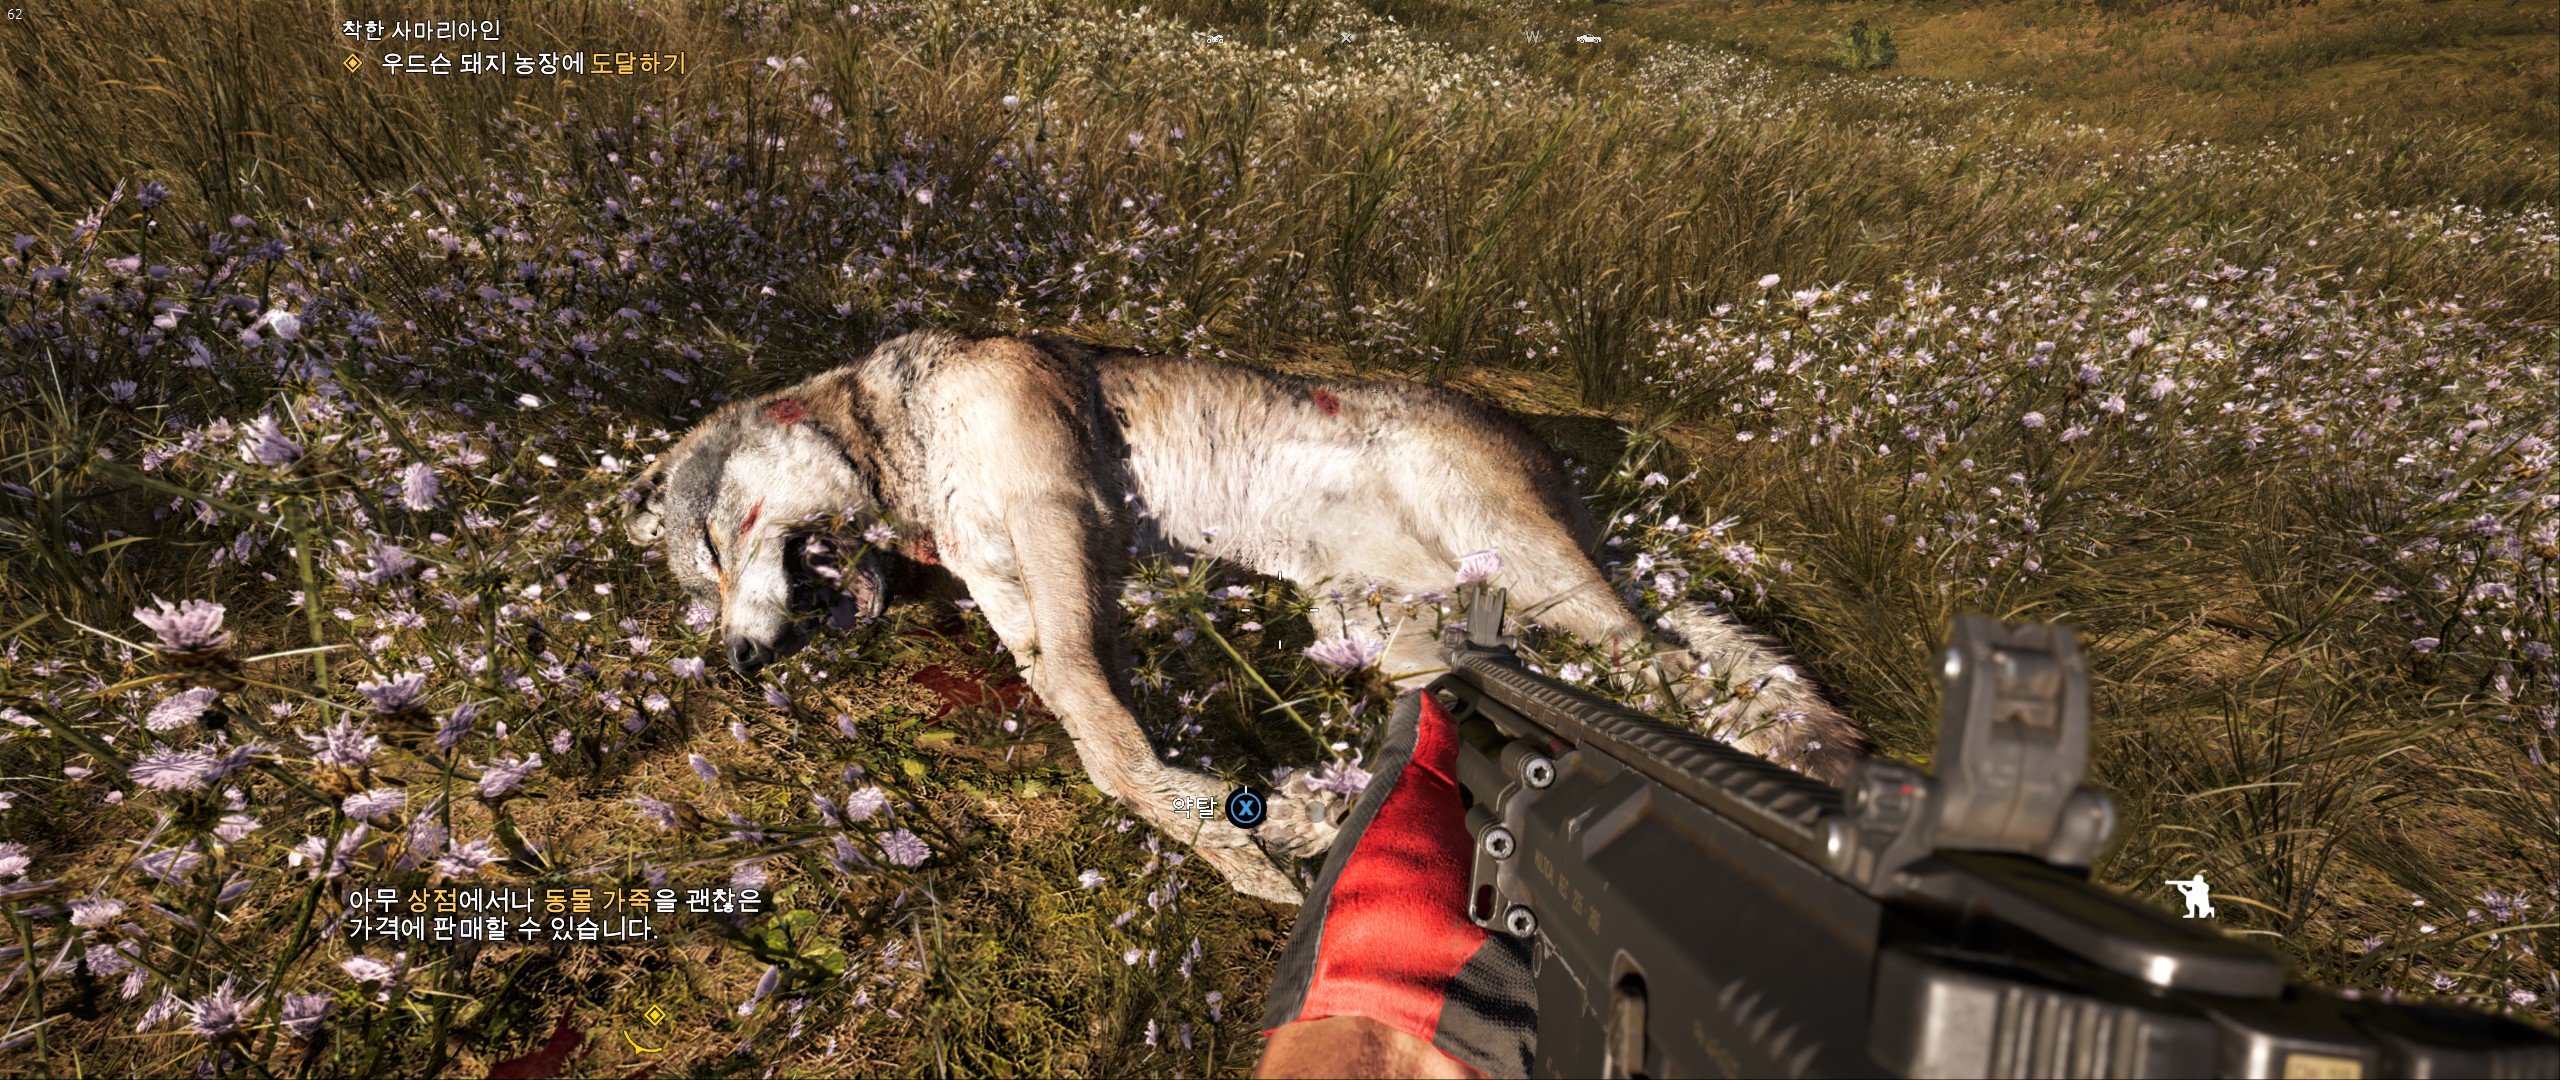 Far Cry 52018-3-27-23-34-41.jpg